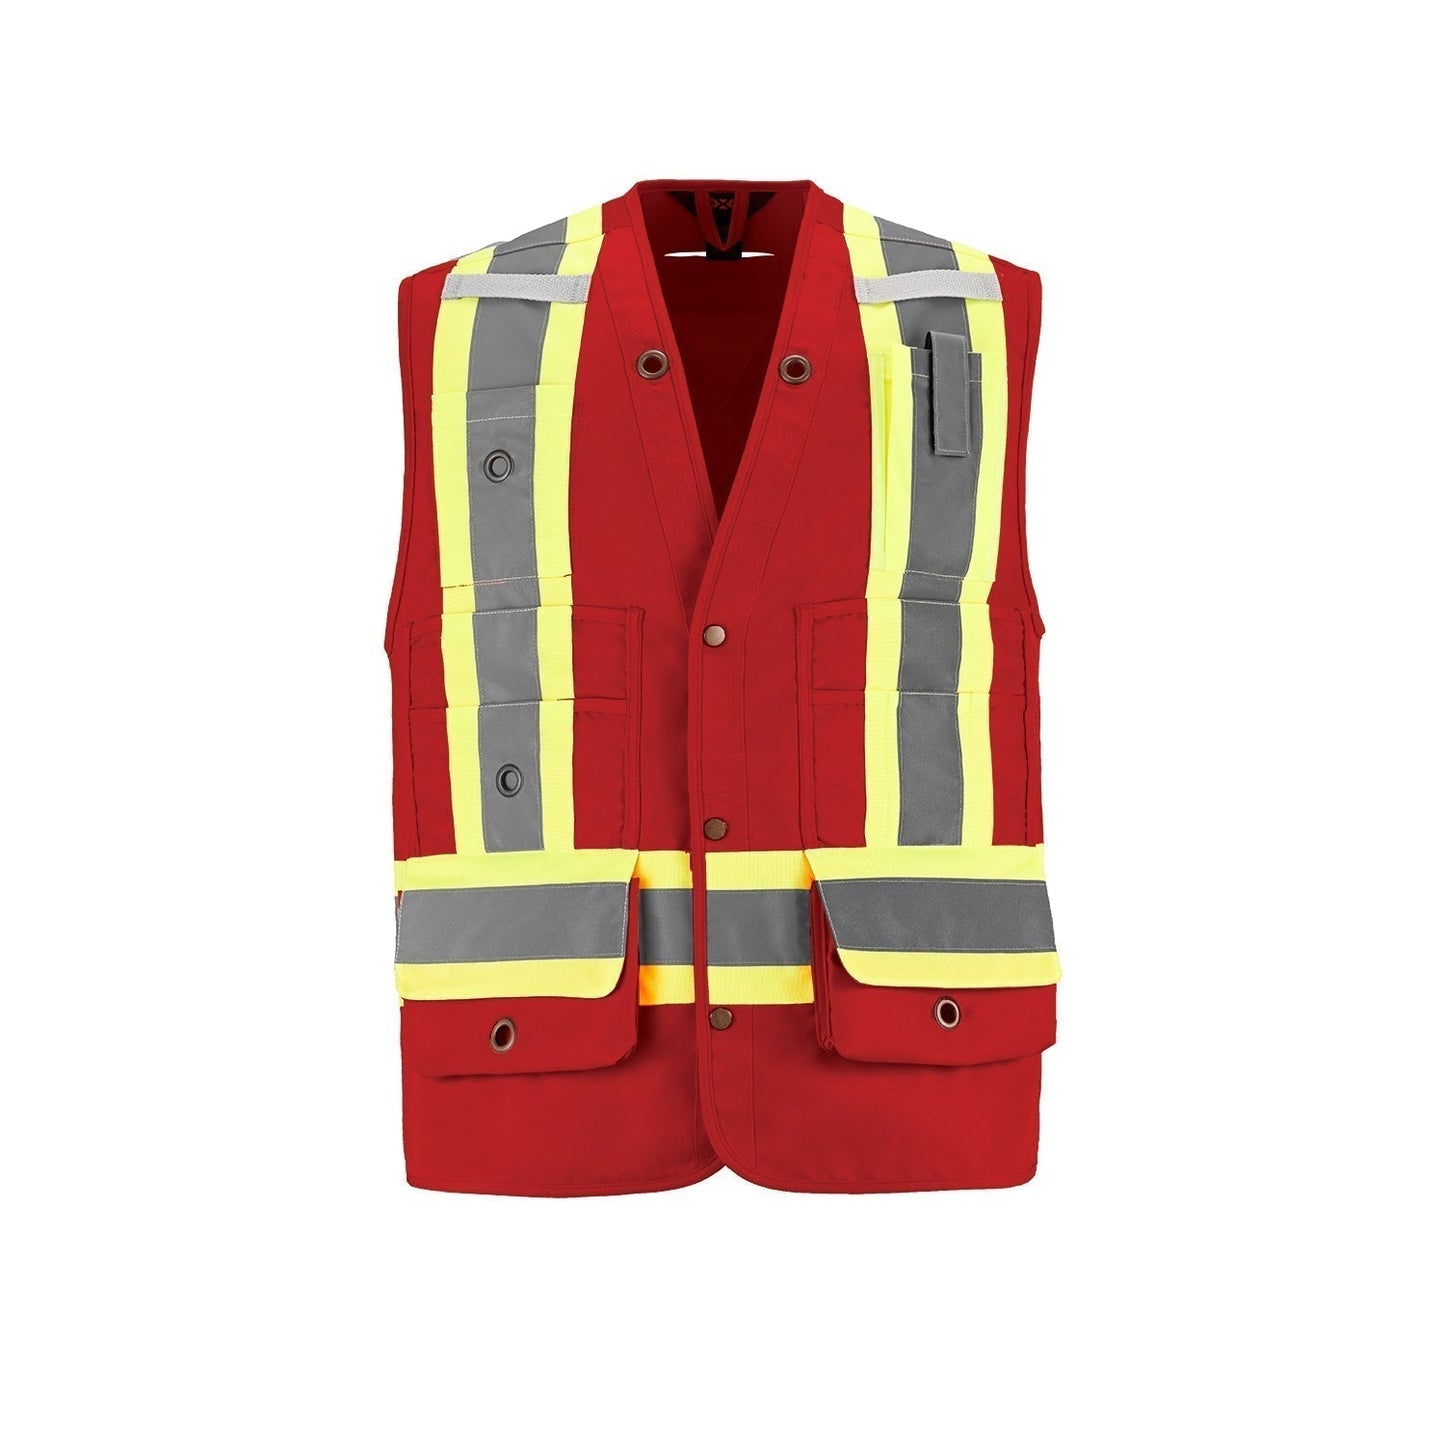 L01190 - Surveyor Men’s Hi - Vis Surveyor’s Safety Vest